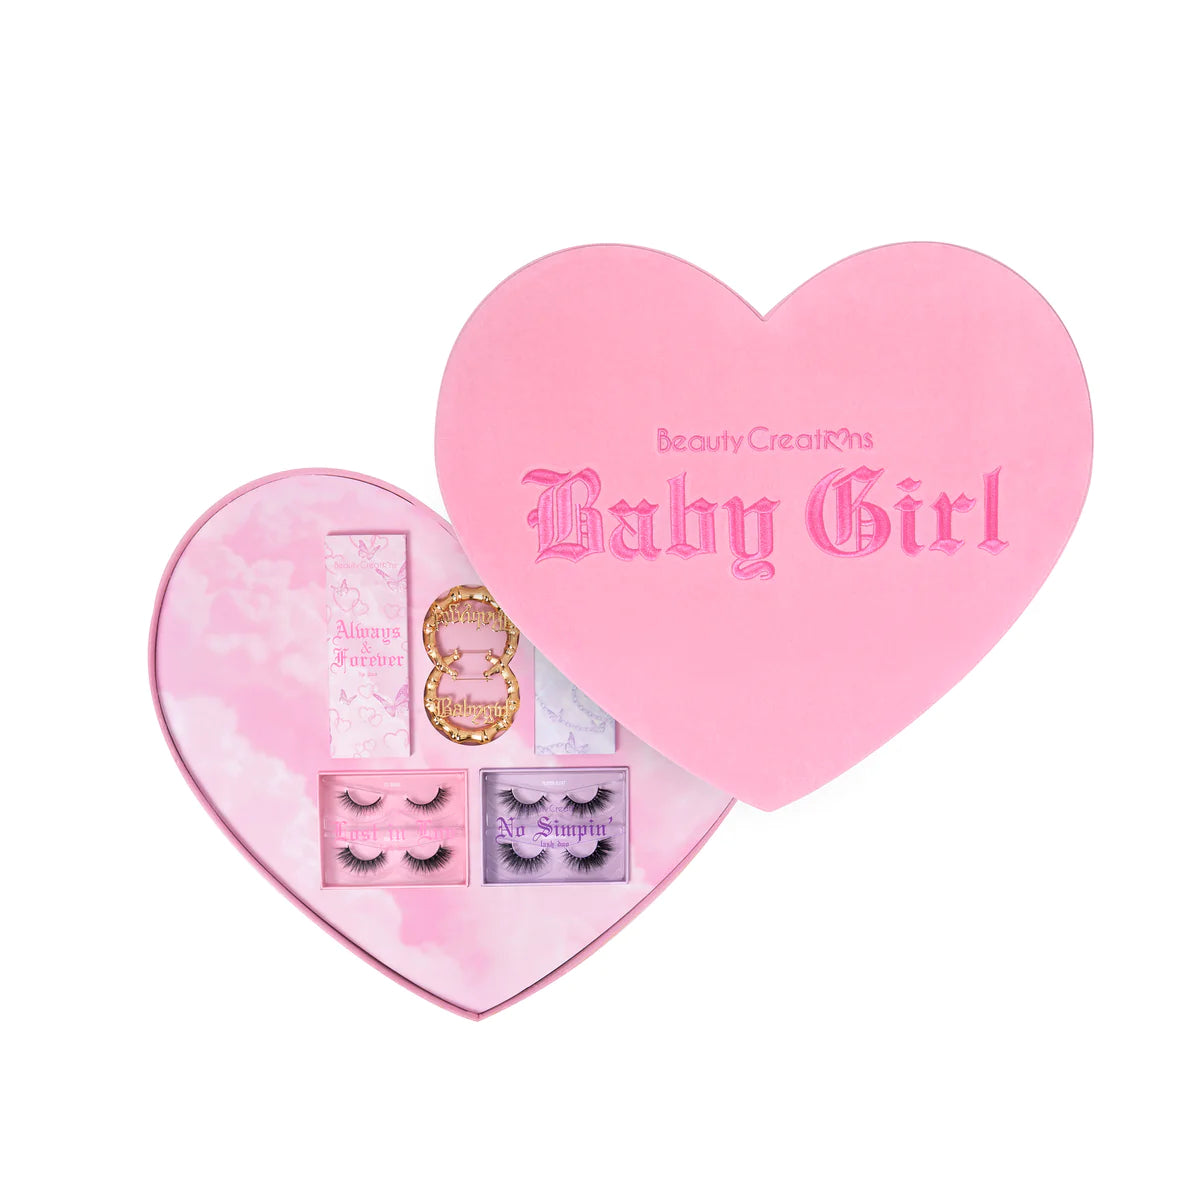 Baby Girl PR Box